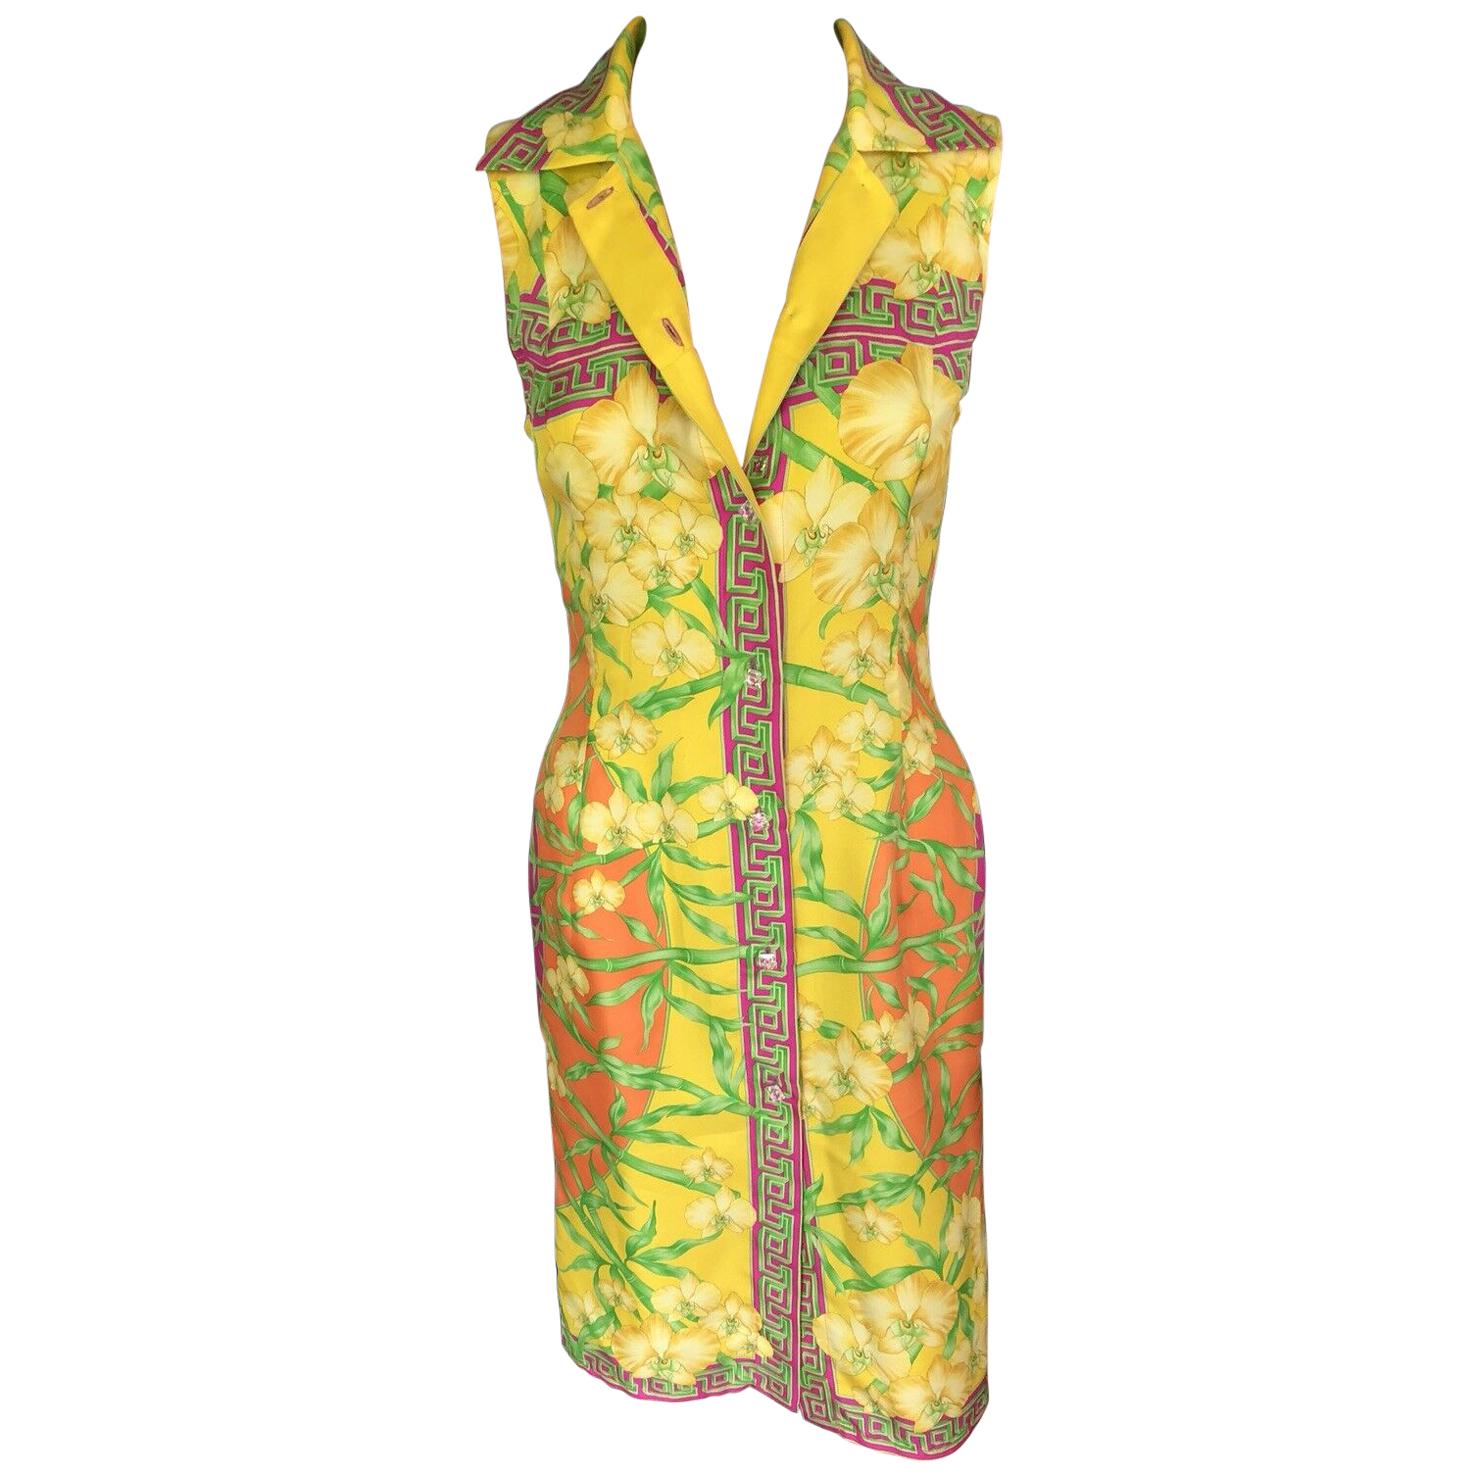 Gianni Versace S/S 2000 Bamboo Print Silk Dress 